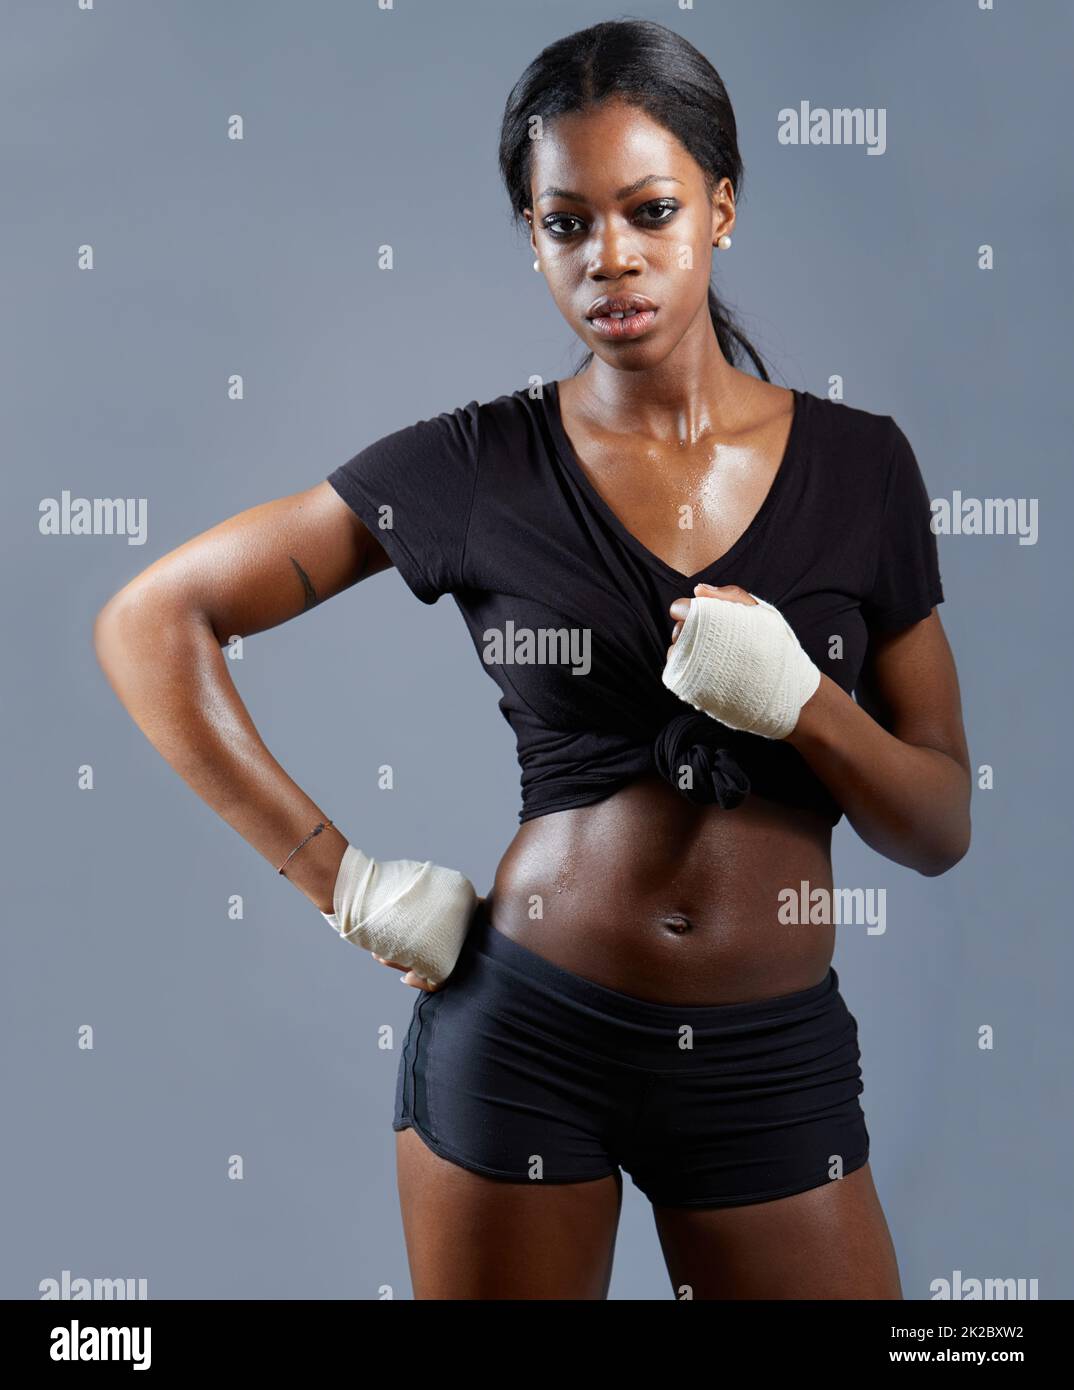 Plain Black Women Boxer